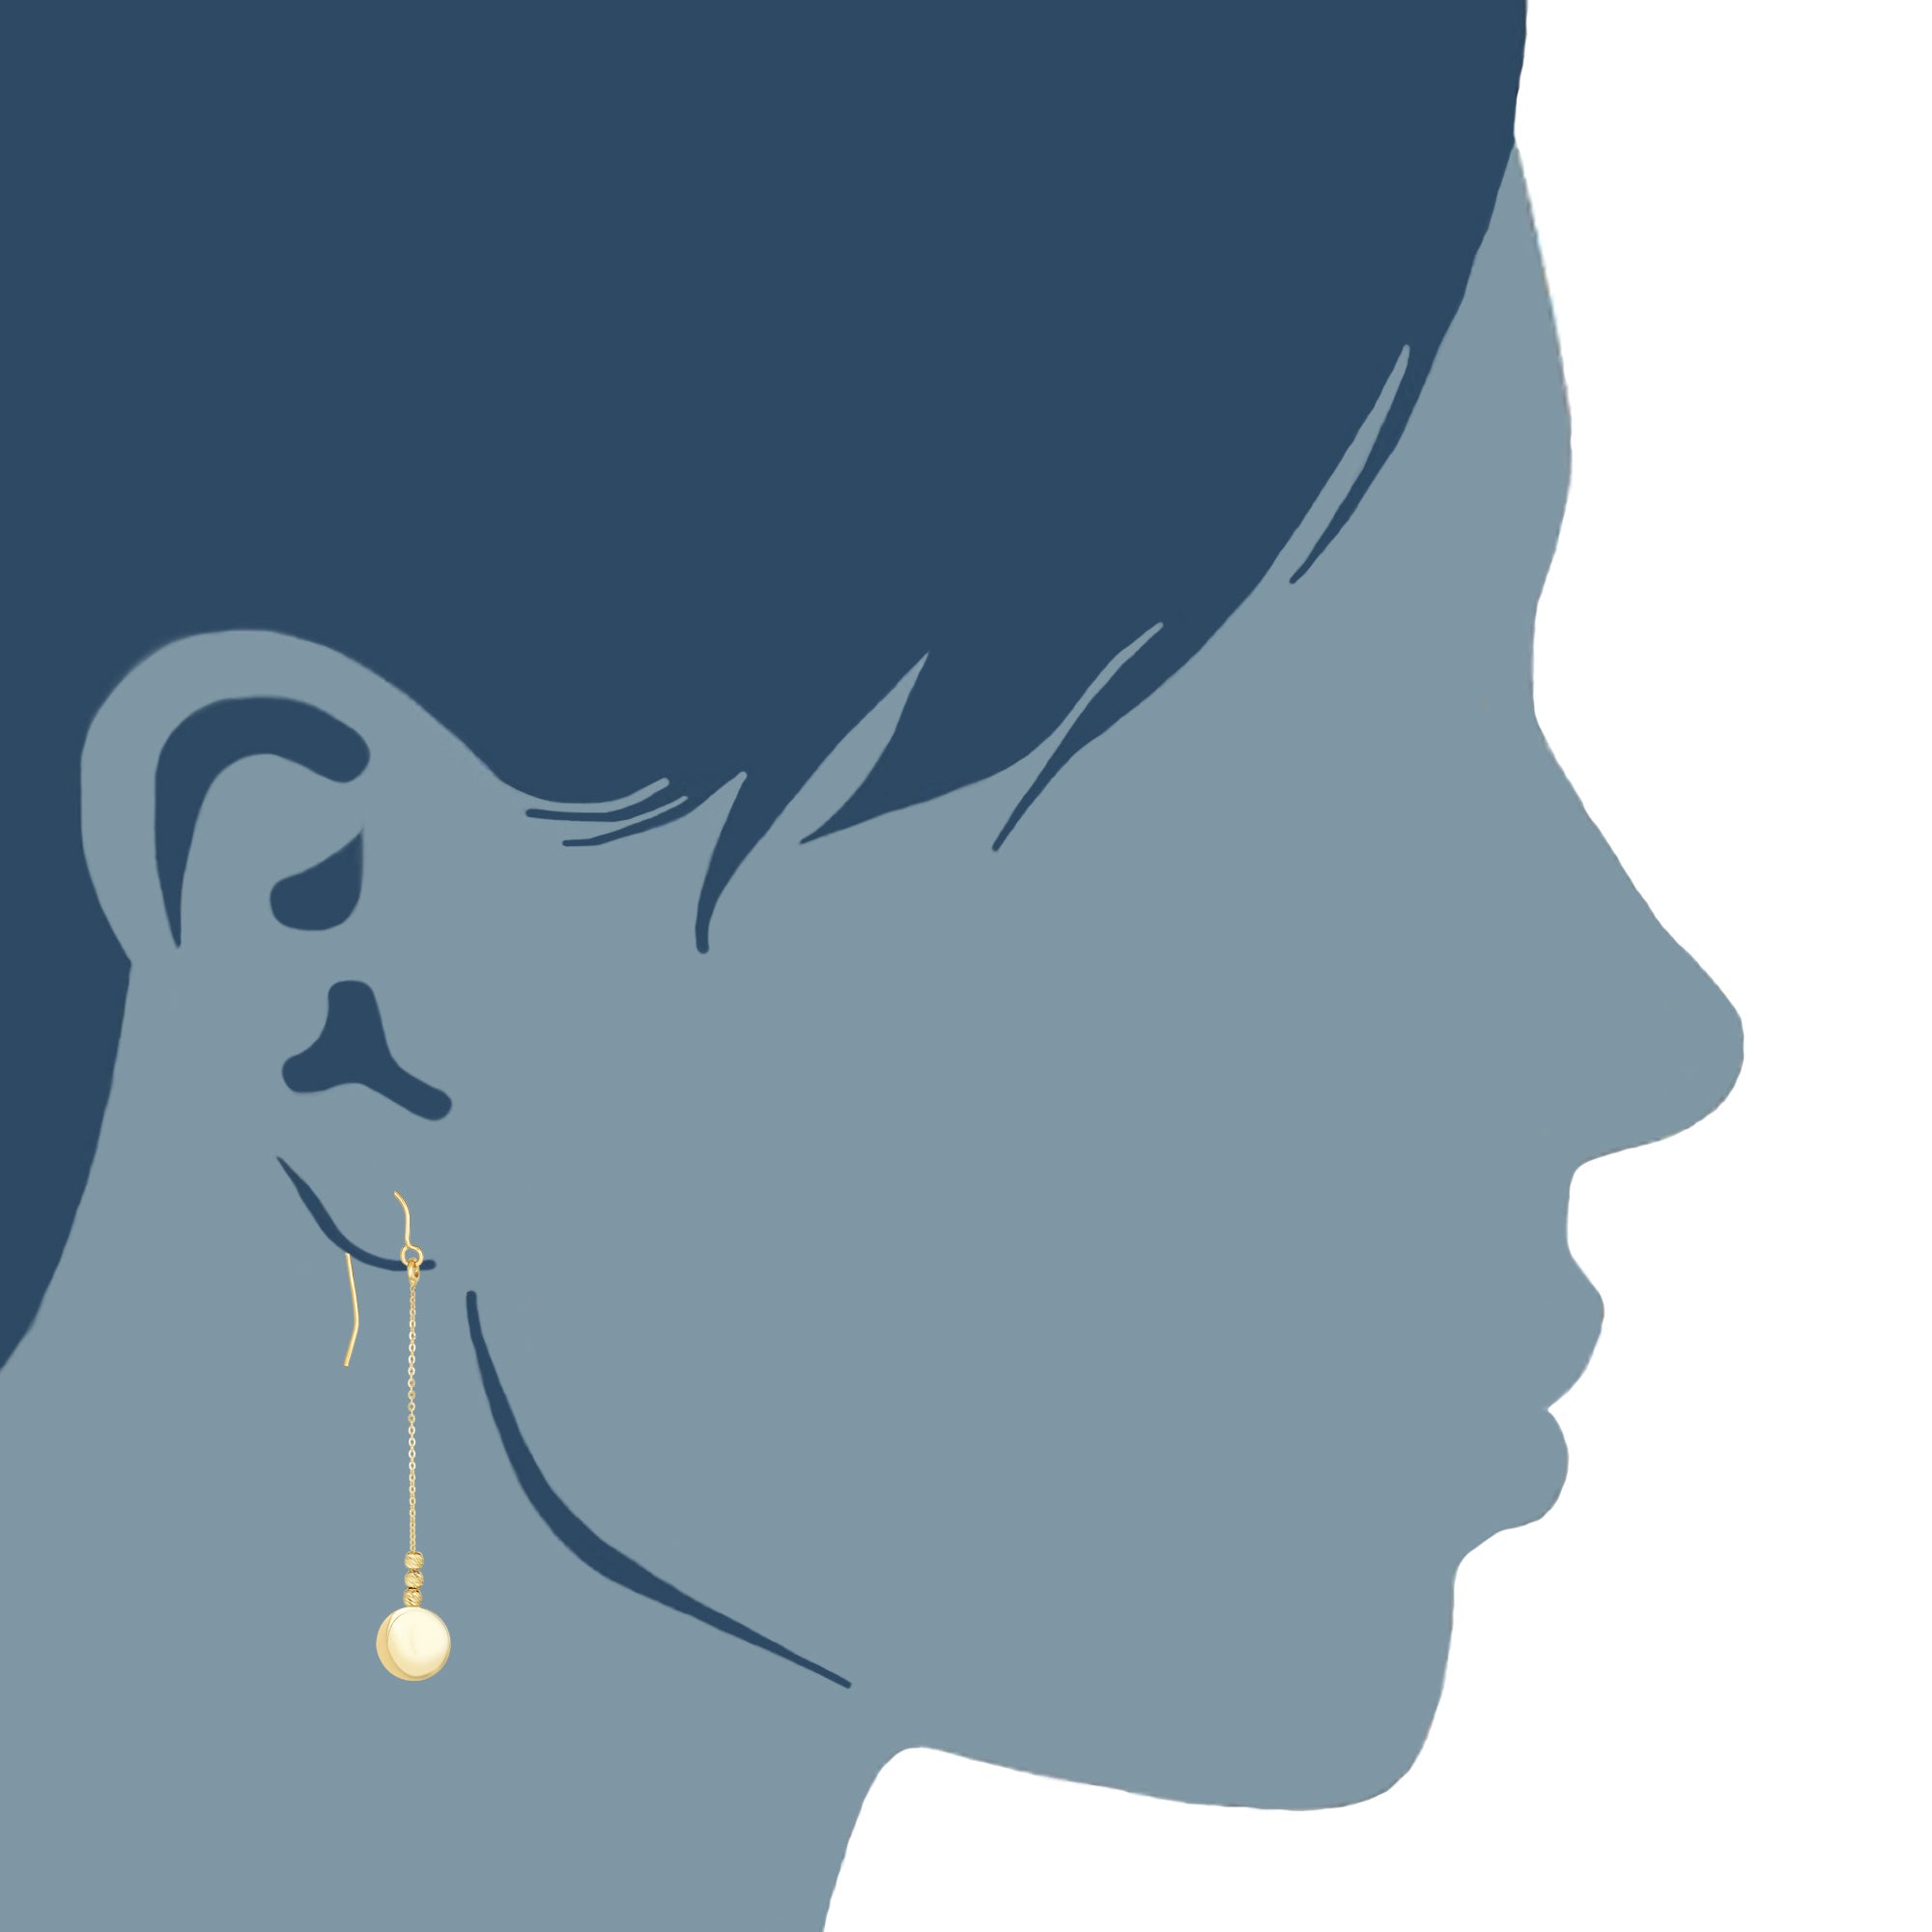 10K Yellow Gold Diamond Cut Bead With Flat Shiny Disc Drop Earrings